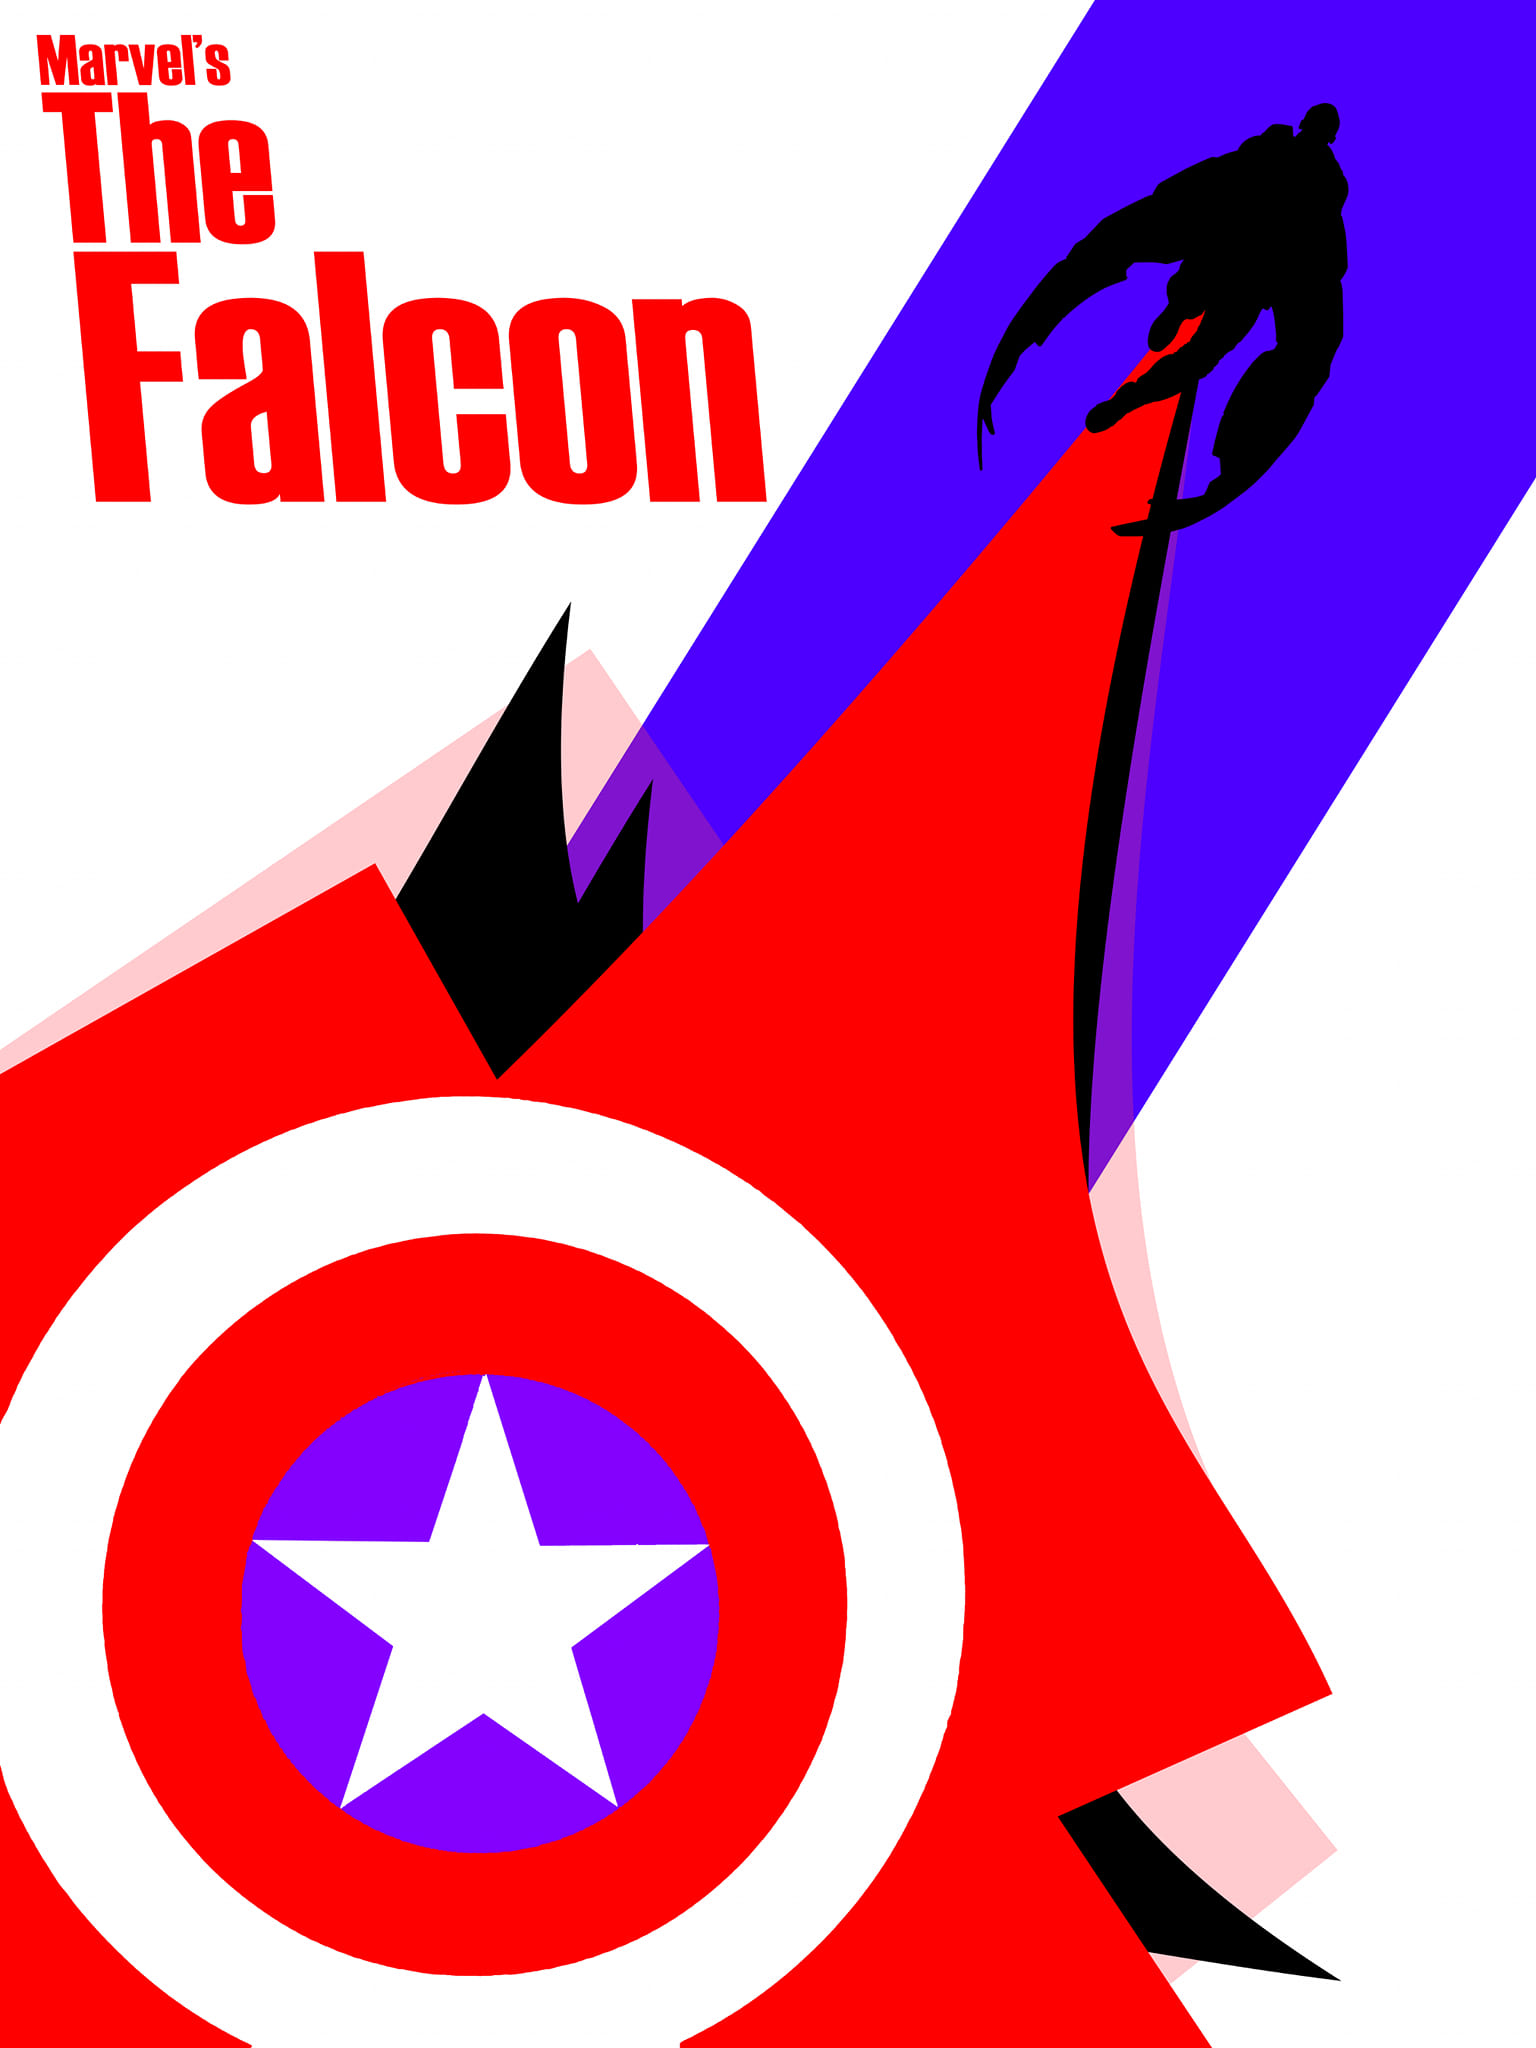 Marvel’s The Falcon